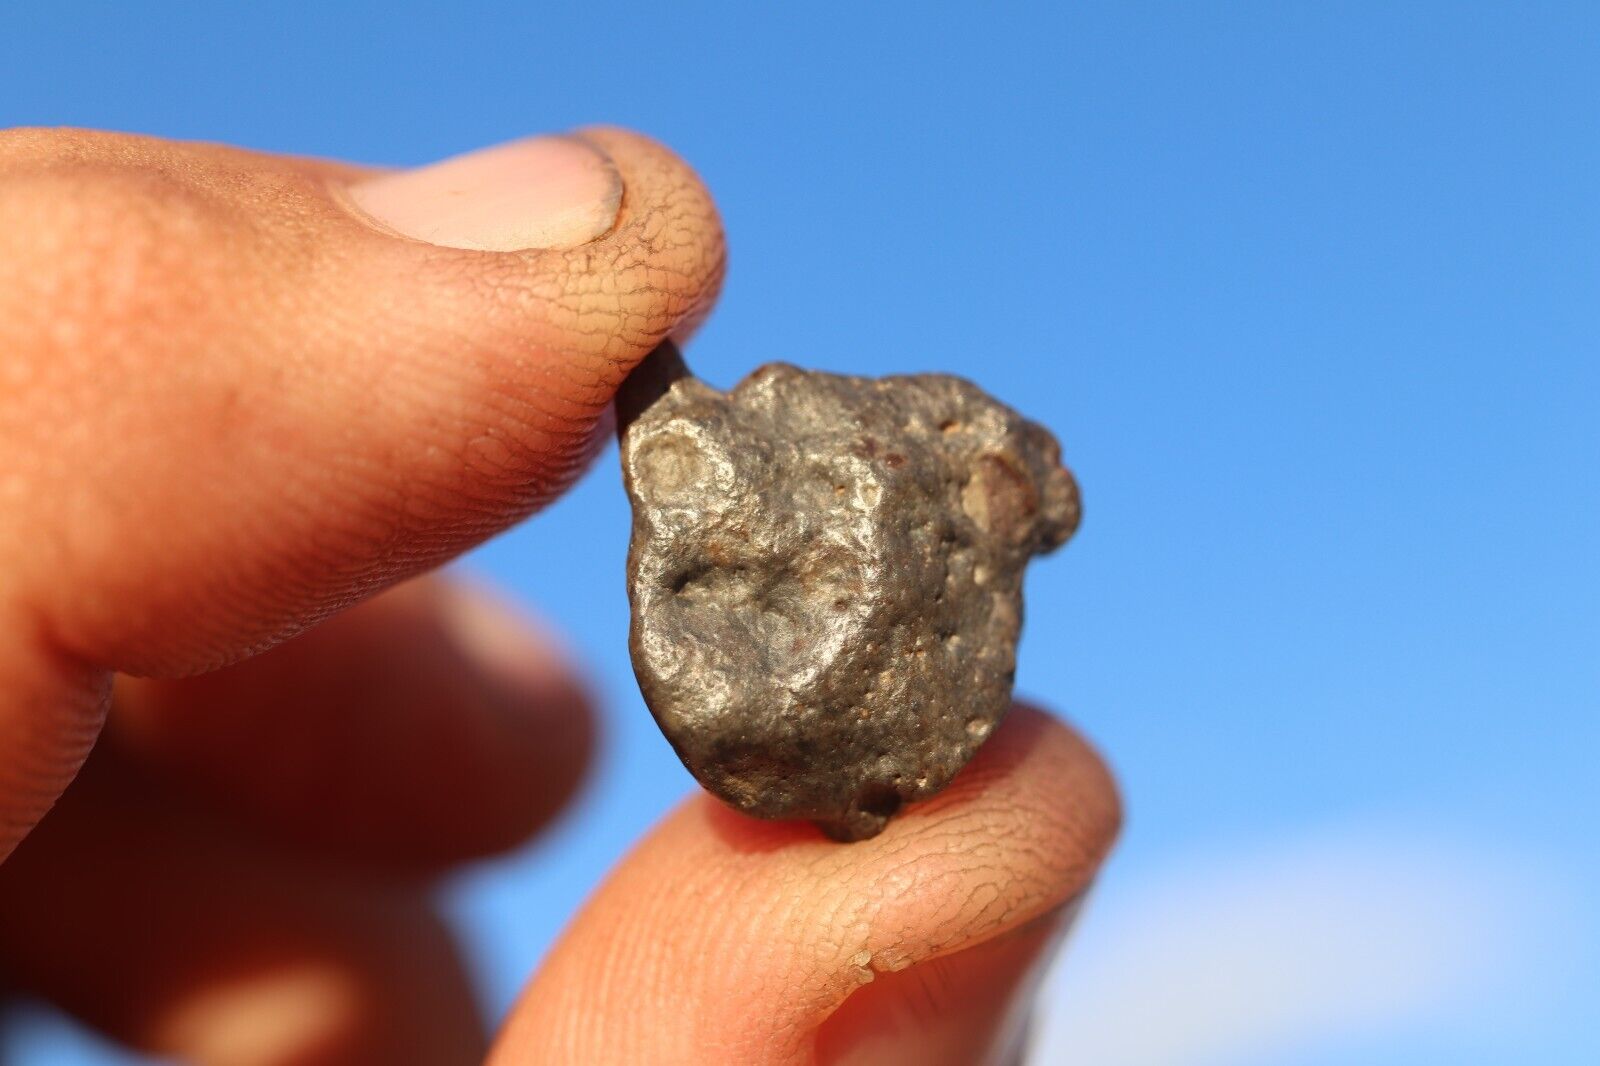 Laayoune 002 Meteorite Lunar feldspathic breccia Moon Rock weight  3.67 grams